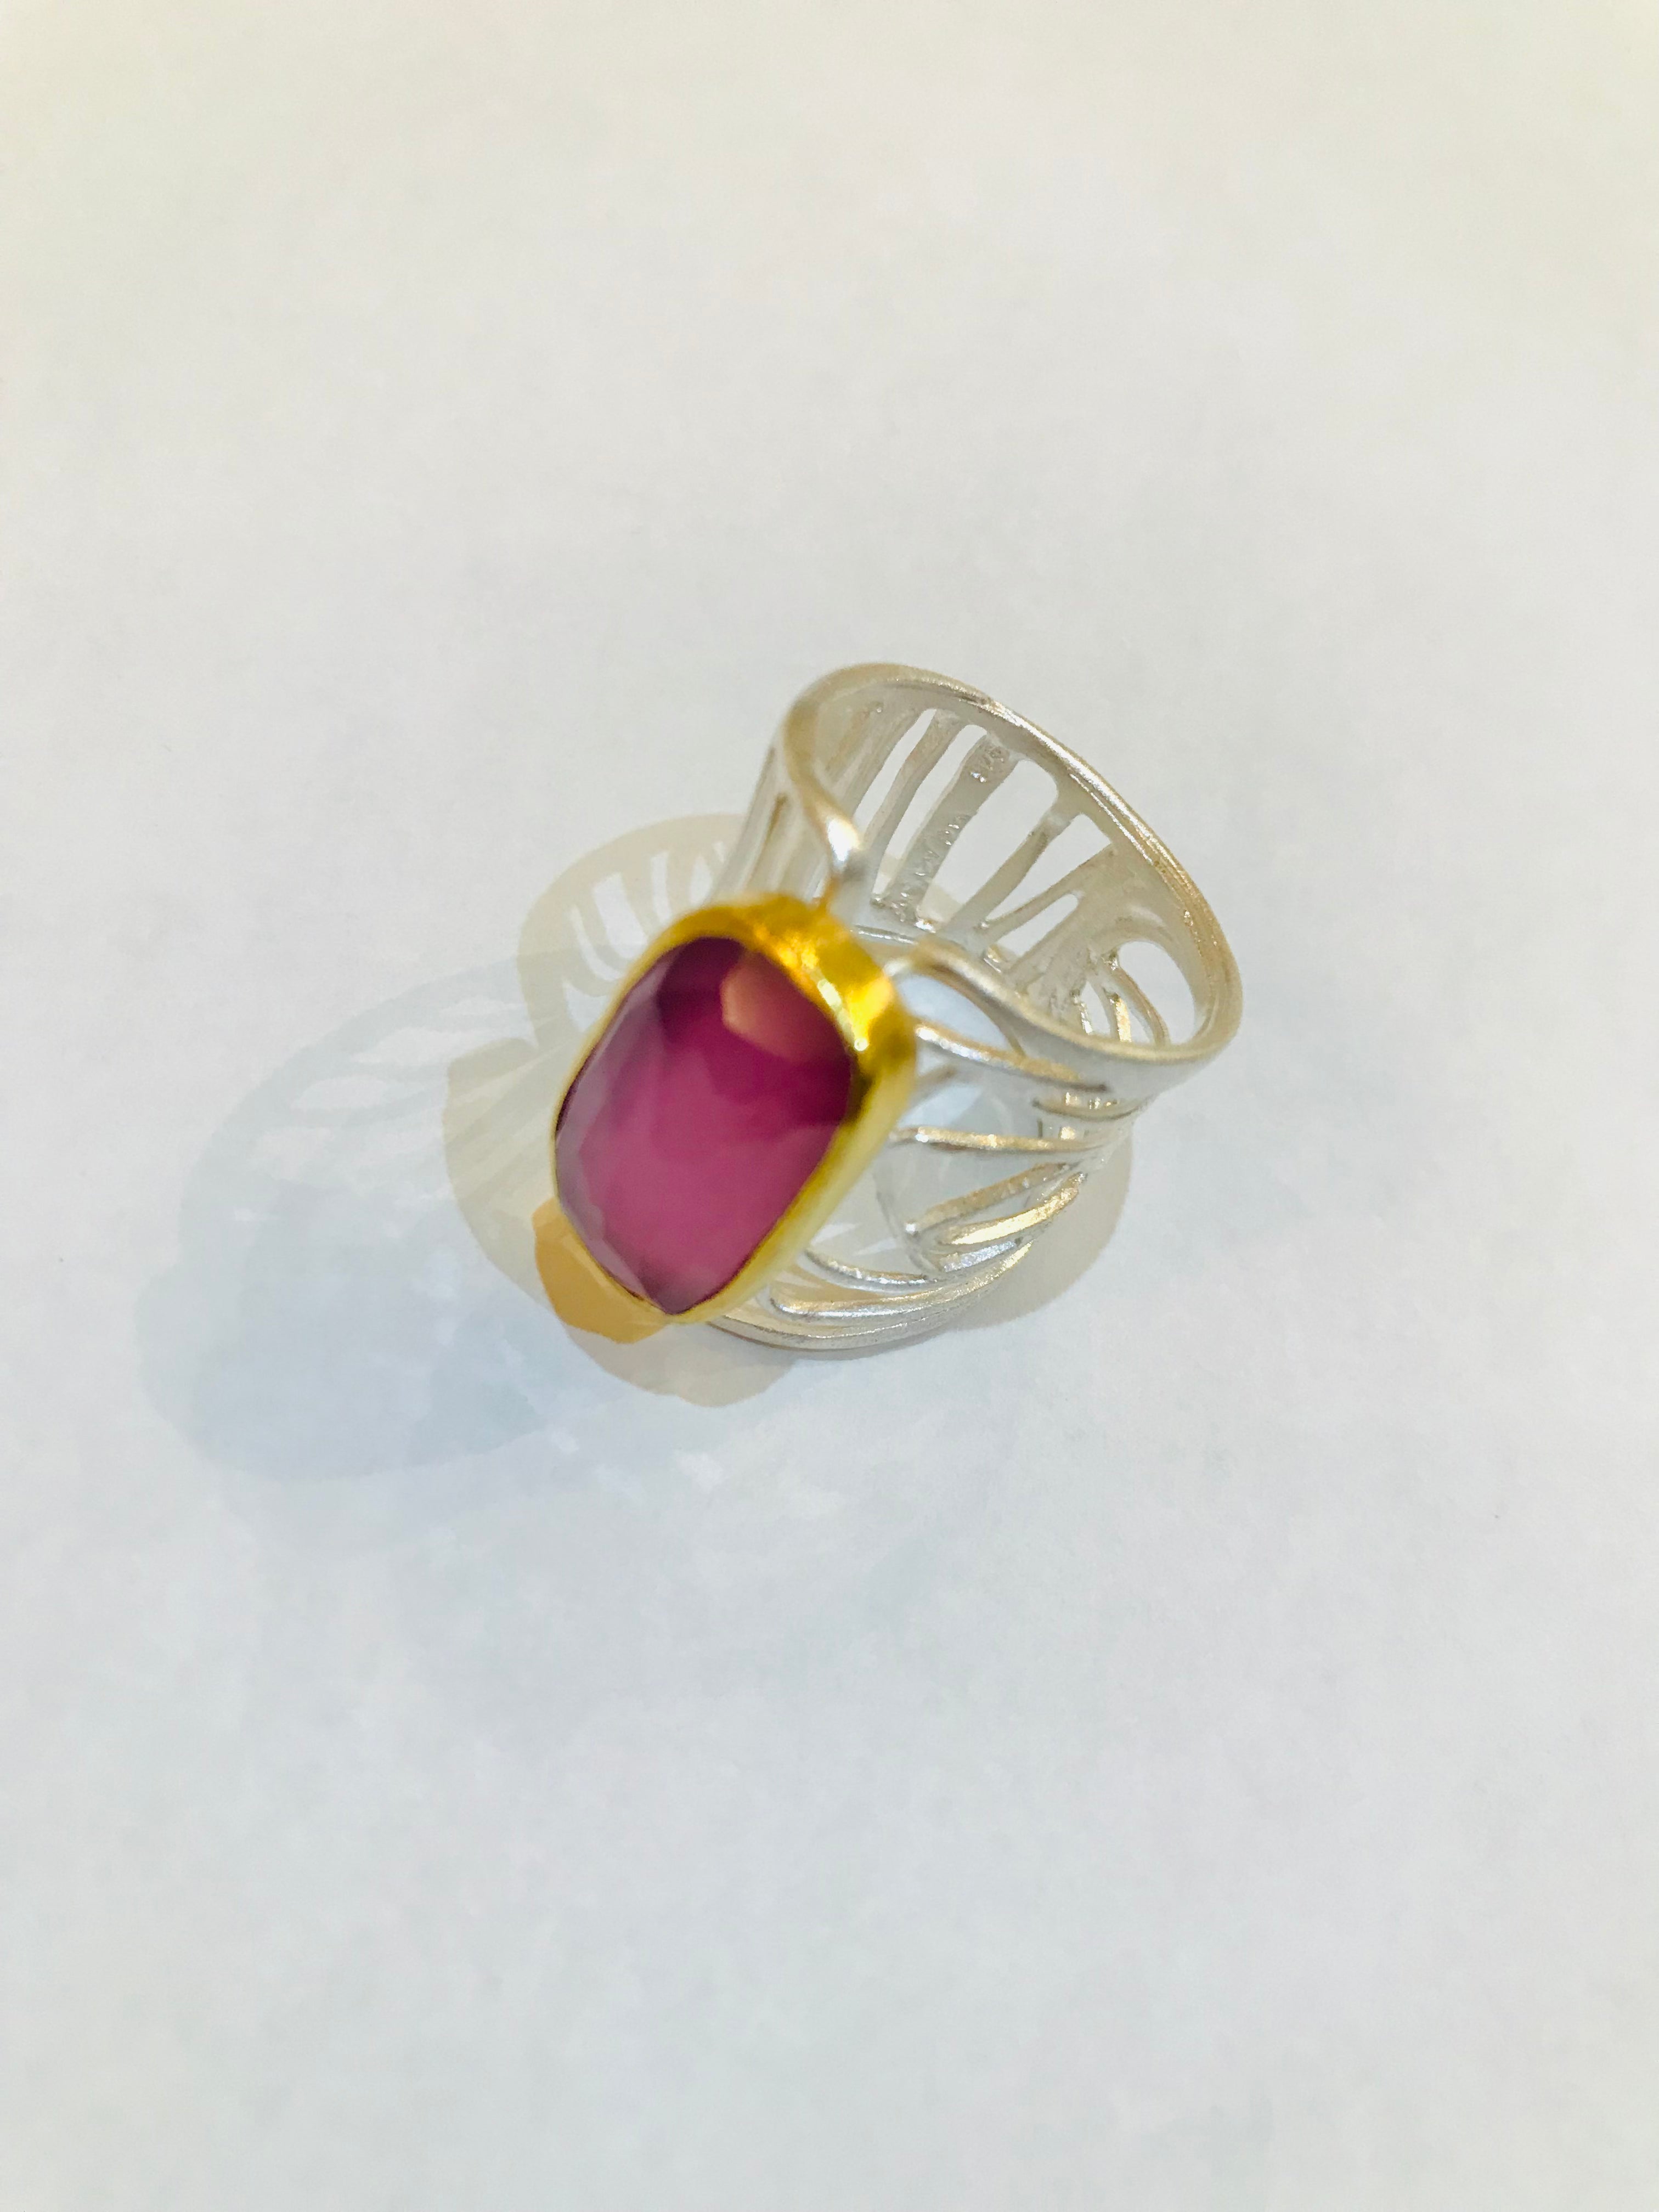 Morganite Natural Gemstone Ring - The Nancy Smillie Shop - Art, Jewellery & Designer Gifts Glasgow